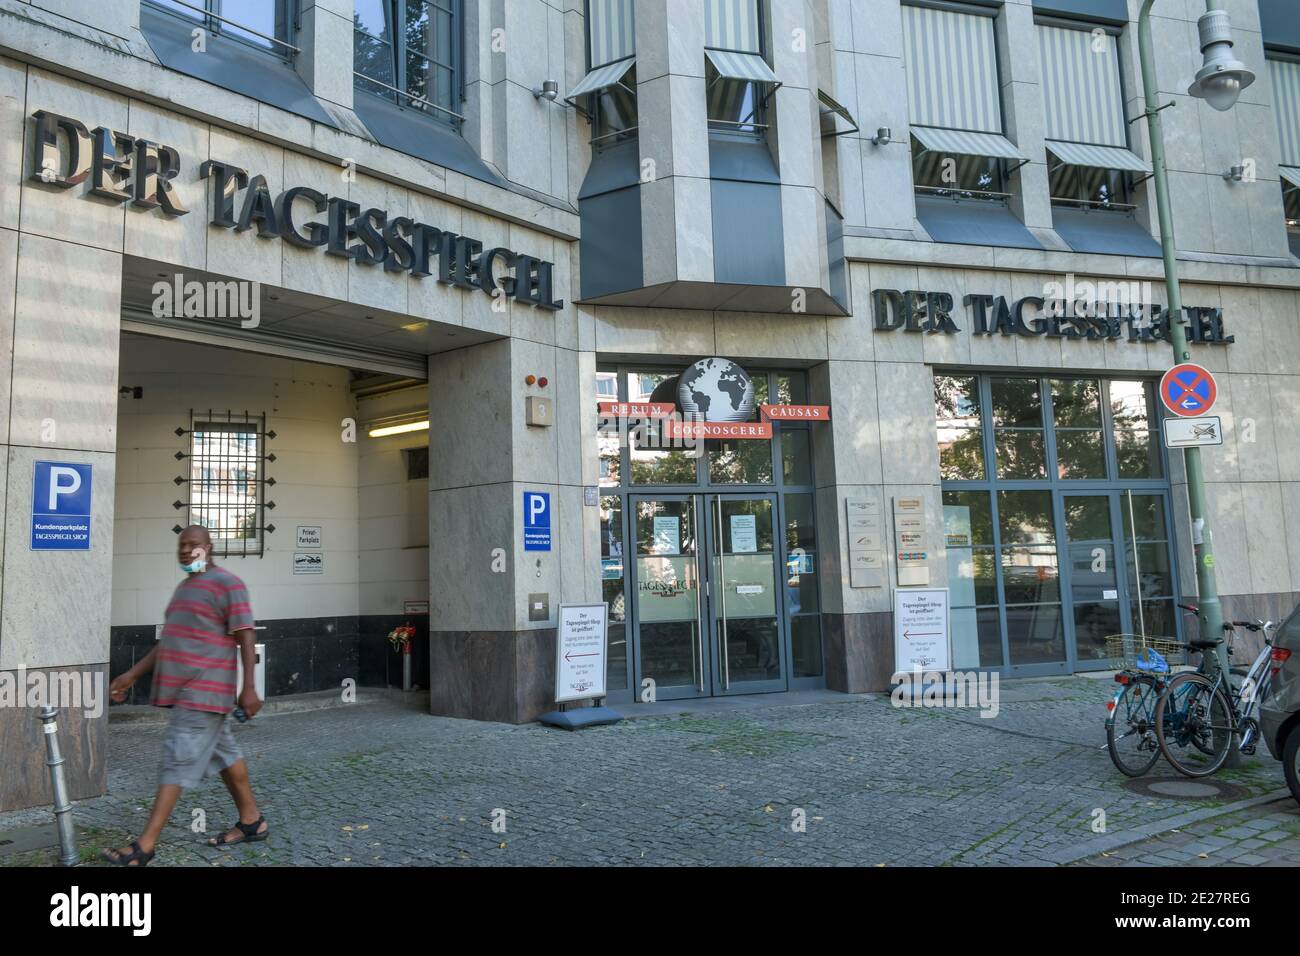 Der Tagesspiegel, Askanischer Platz, Kreuzberg, Berlin, Deutschland Banque D'Images